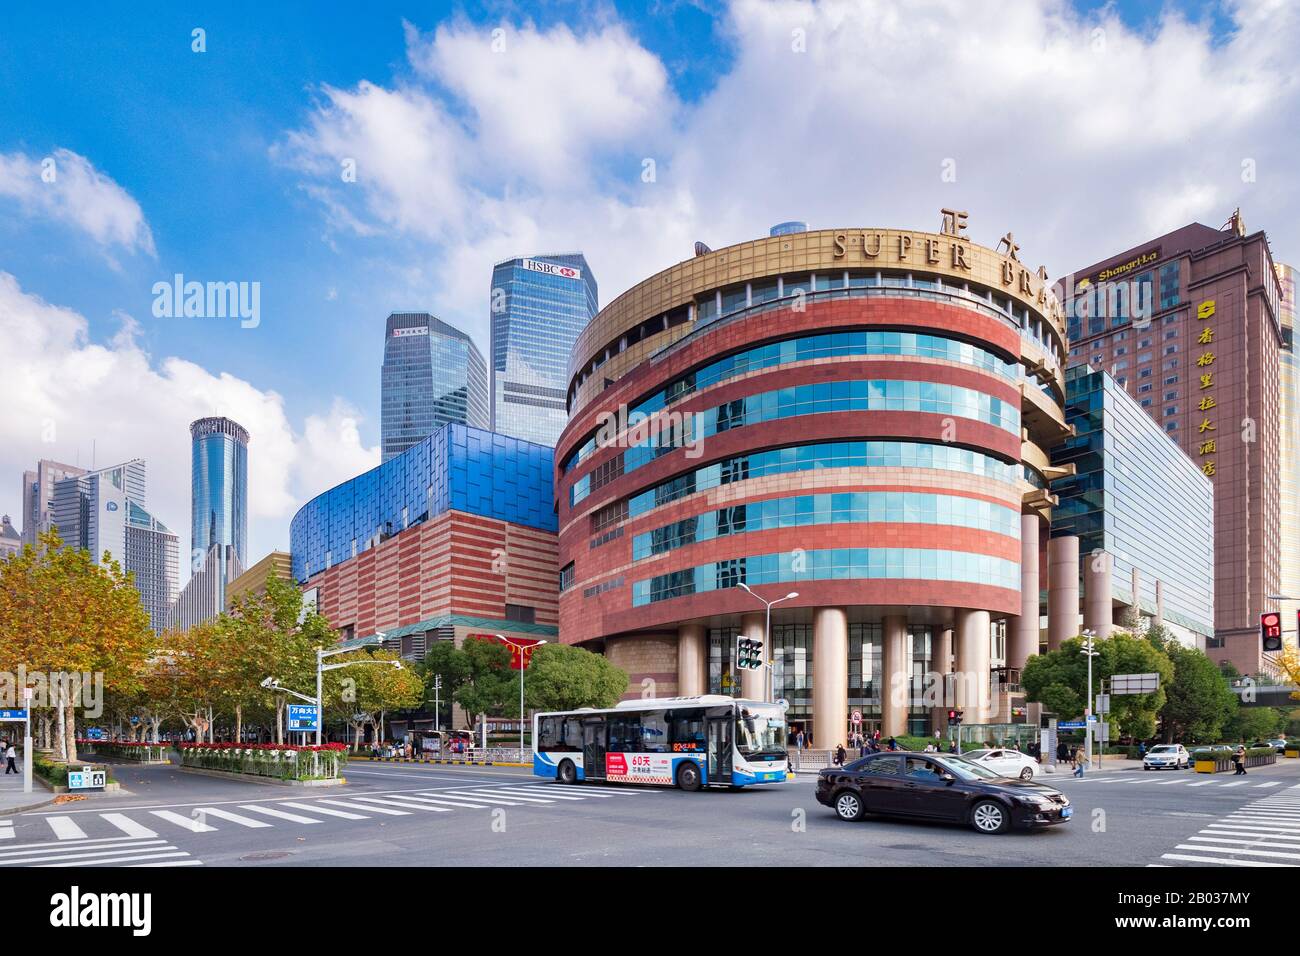 1 de diciembre de 2018: Shanghai, China - Super Brand Mall, un centro comercial de 13 pisos entre los modernos rascacielos del distrito de Pudong. Foto de stock